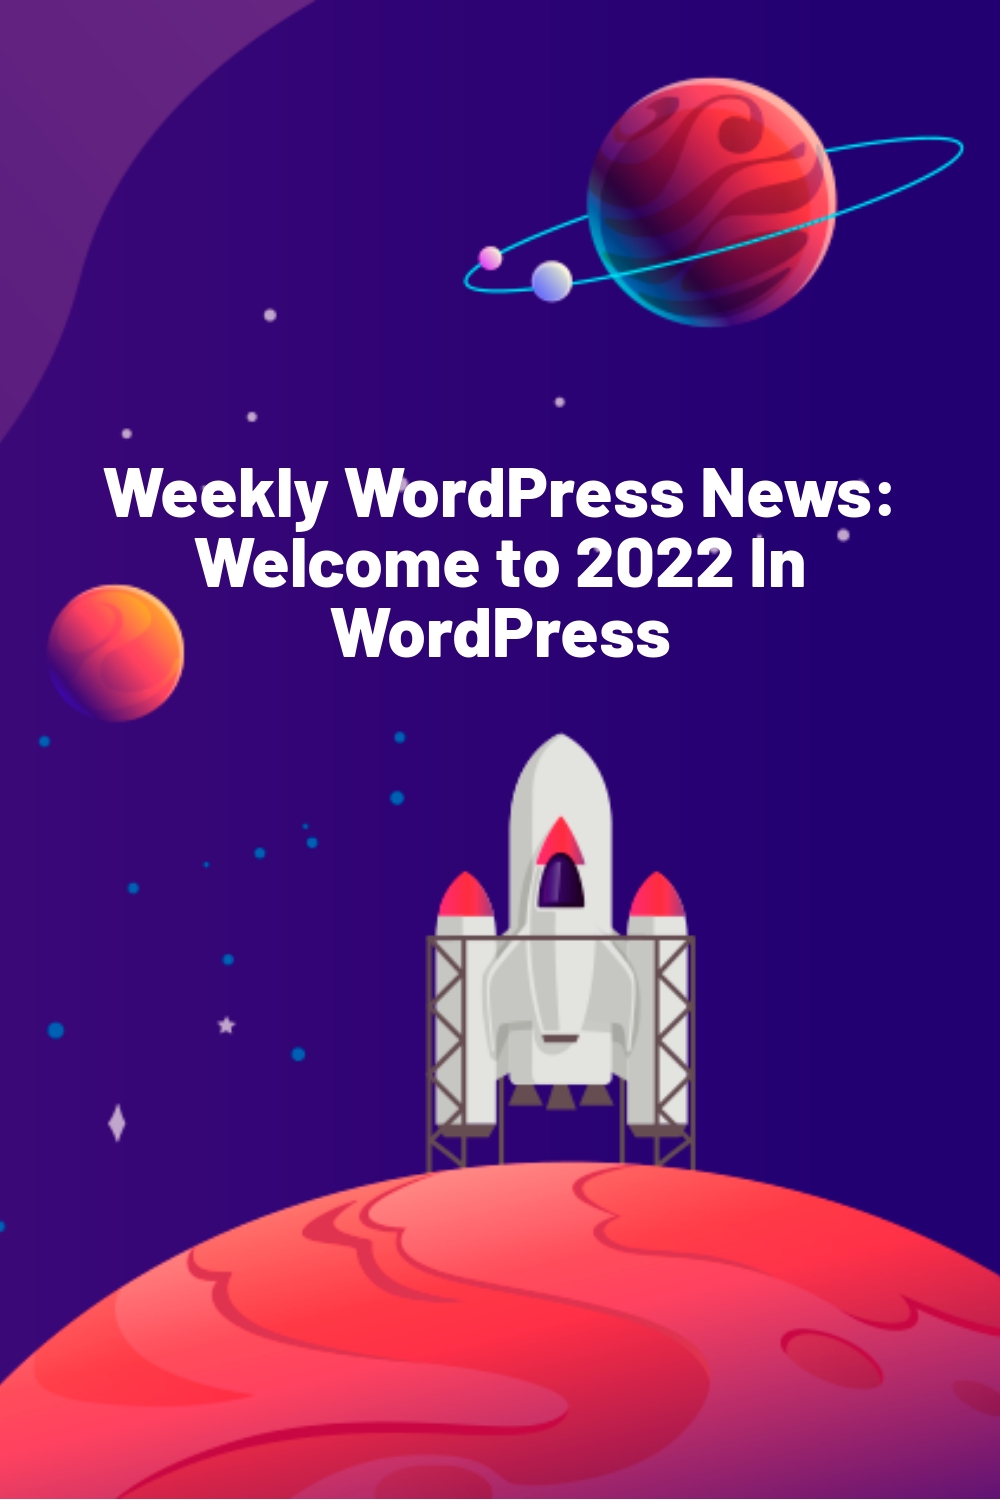 Weekly WordPress News: Welcome to 2022 In WordPress